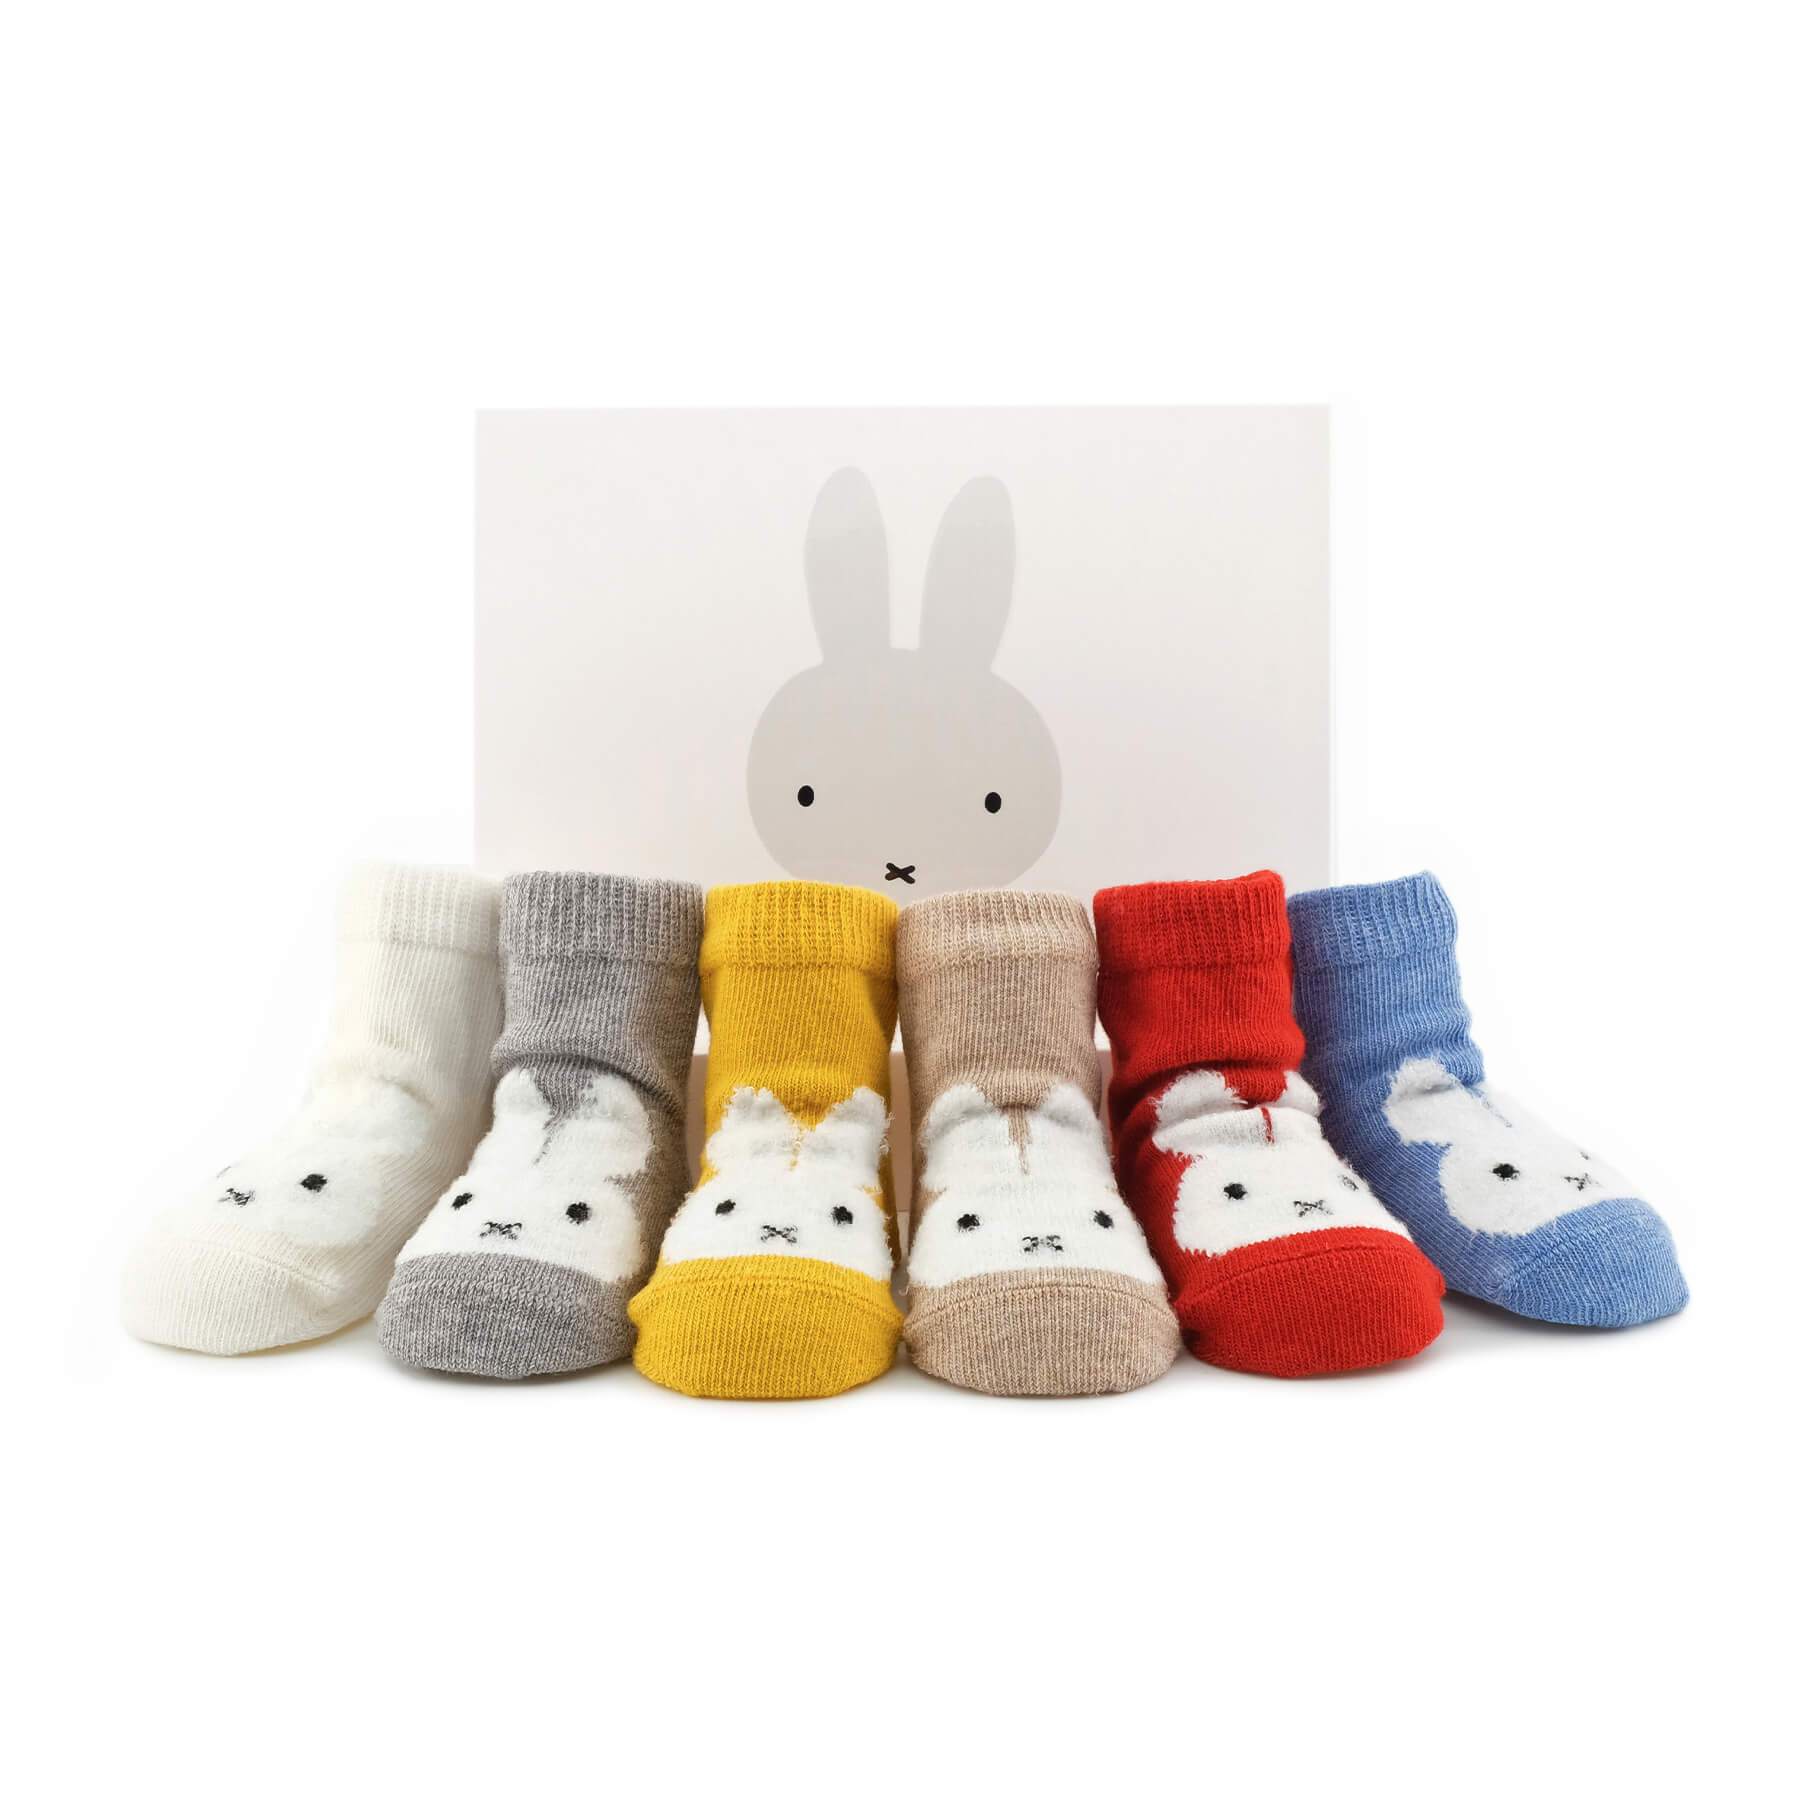 Baby Socks - Miffy x Etiquette Vintage Baby Socks Gift Box - nijntje colorful baby socks - main view⎪Lil'Etiquette Clothiers